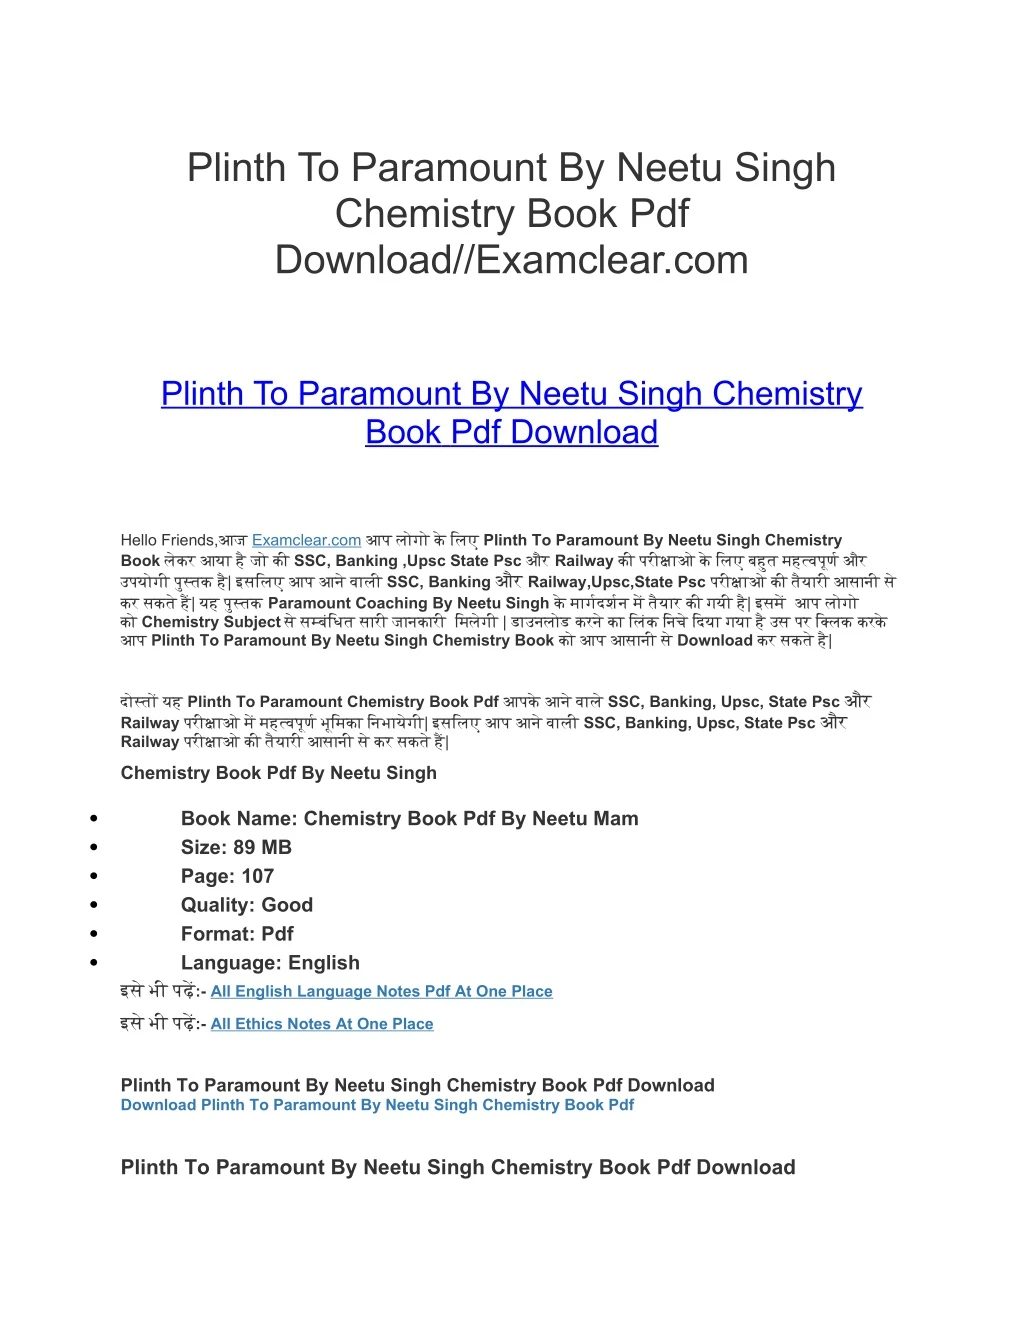 plinth to paramount by neetu singh chemistry book